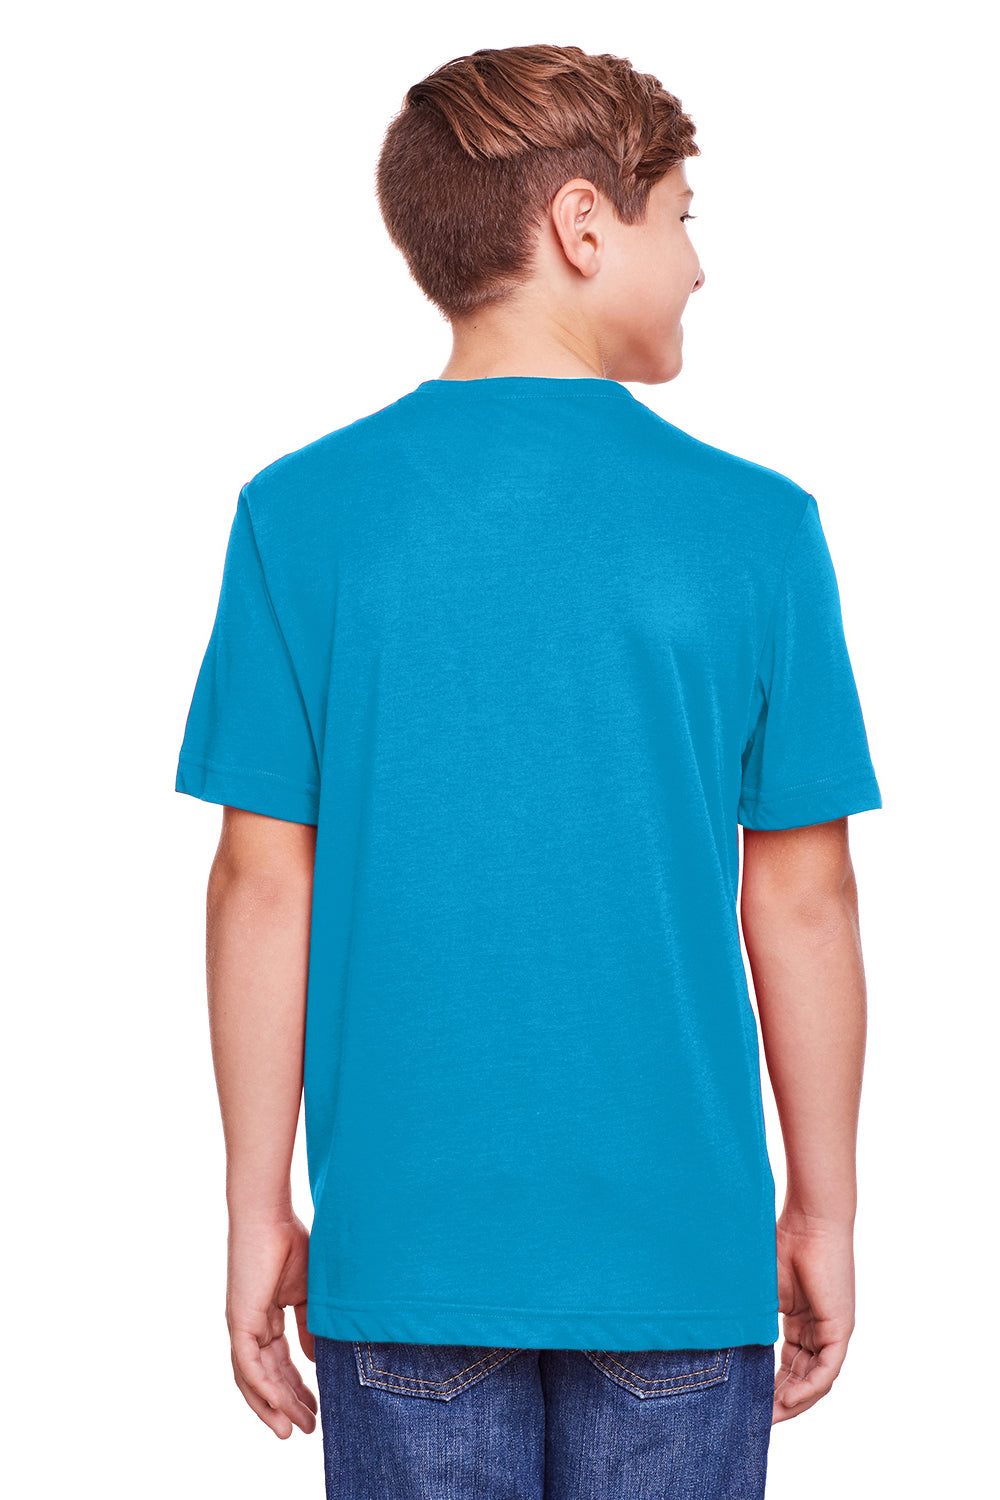 Core 365 CE111Y Youth Fusion ChromaSoft Performance Moisture Wicking Short Sleeve Crewneck T-Shirt Electric Blue Back